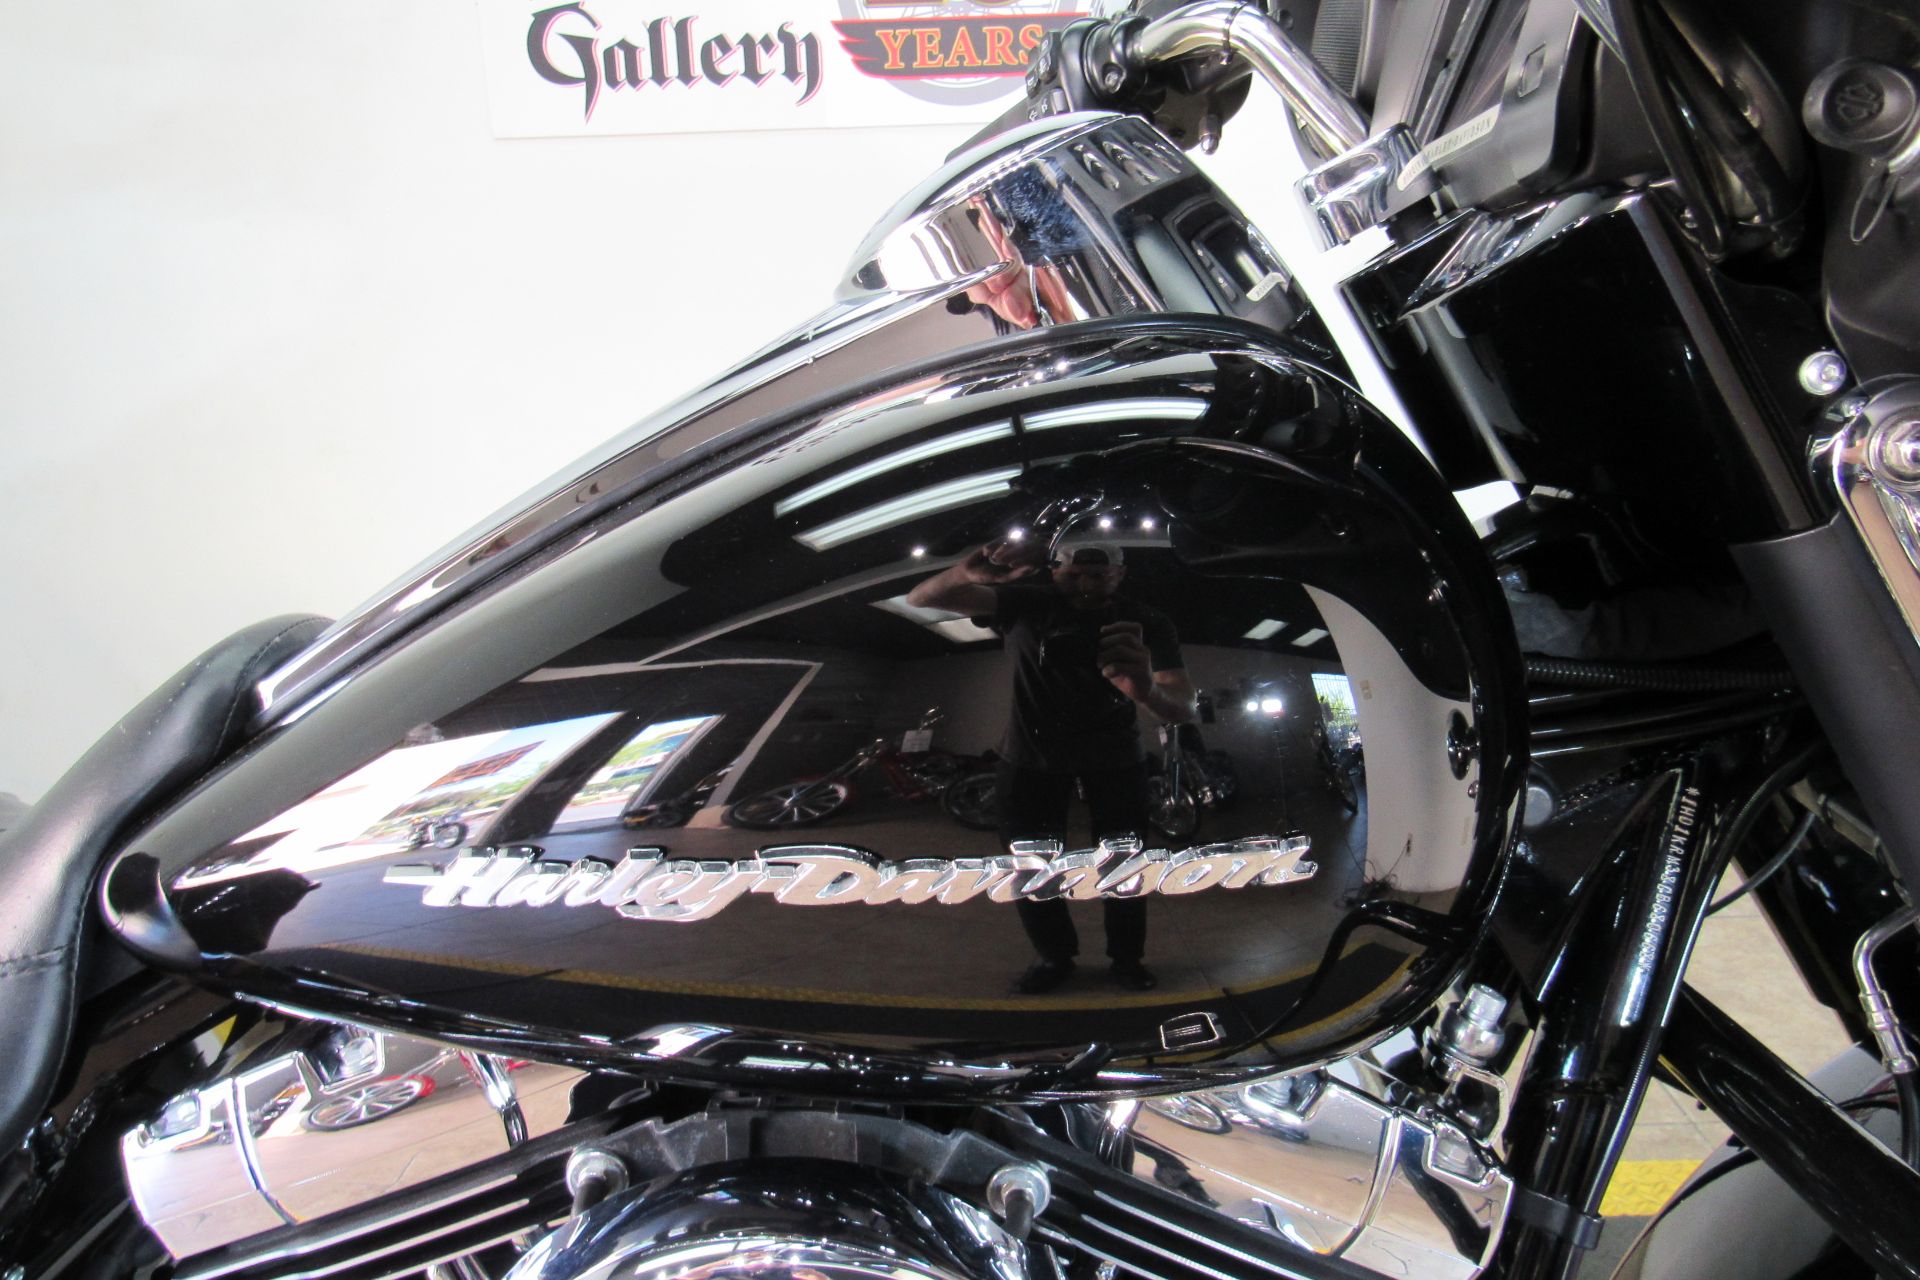 2016 Harley-Davidson Street Glide® Special in Temecula, California - Photo 7